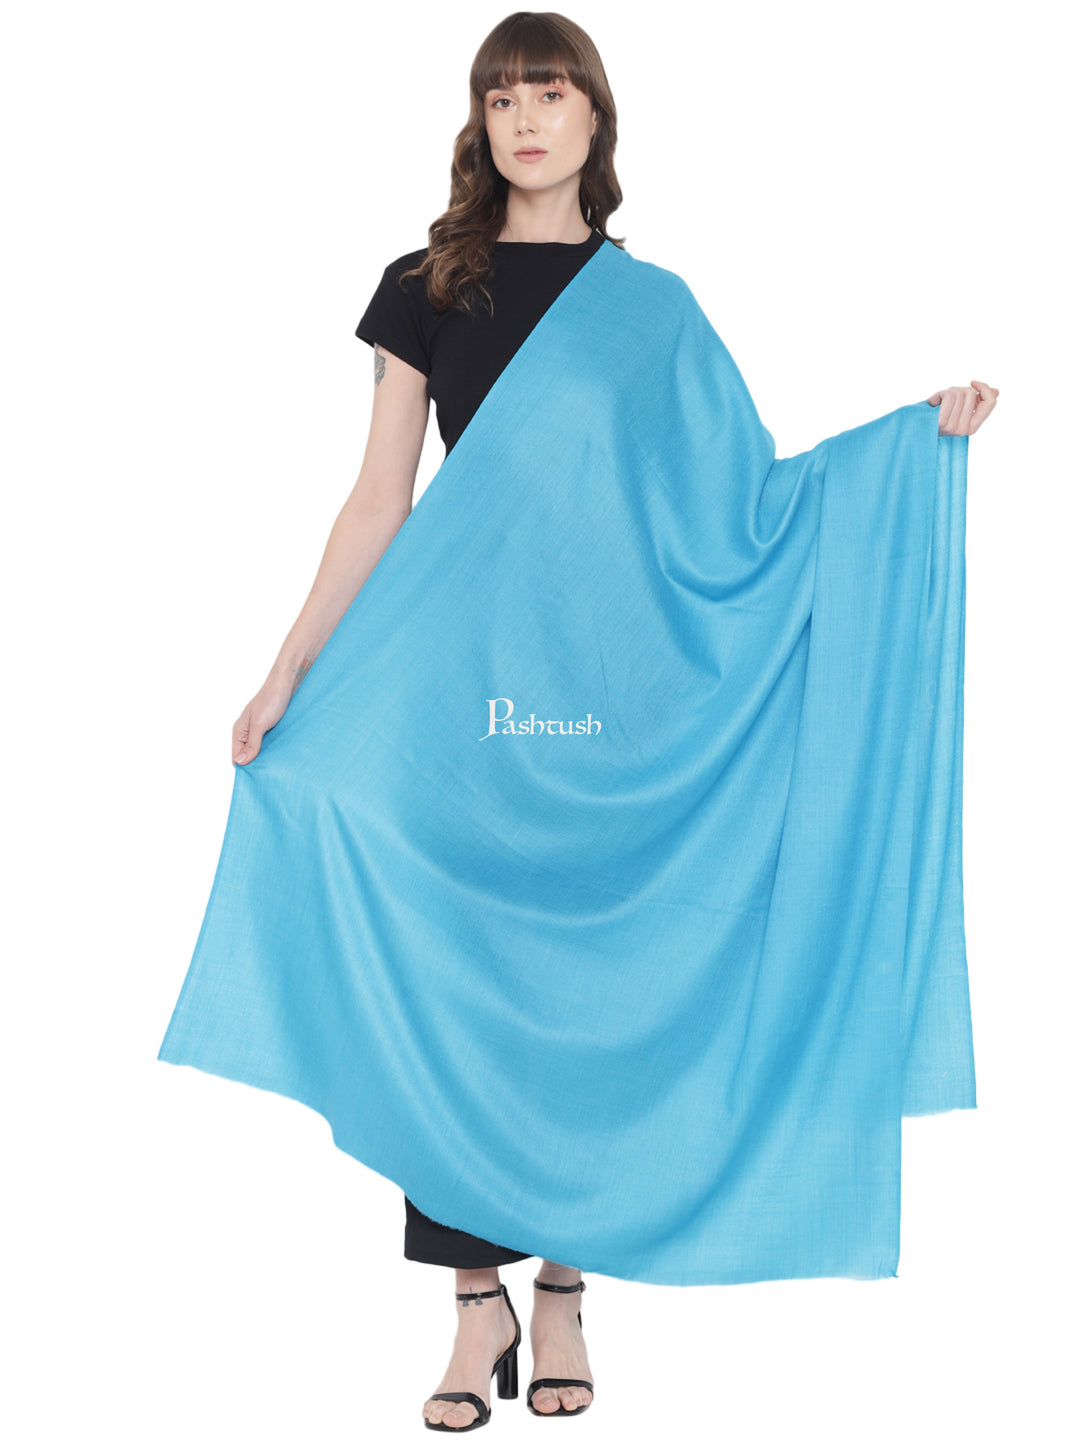 Pashtush Womens Fine Wool Shawl, Extra Soft, Warm, Light Weight, Jasmine Blue